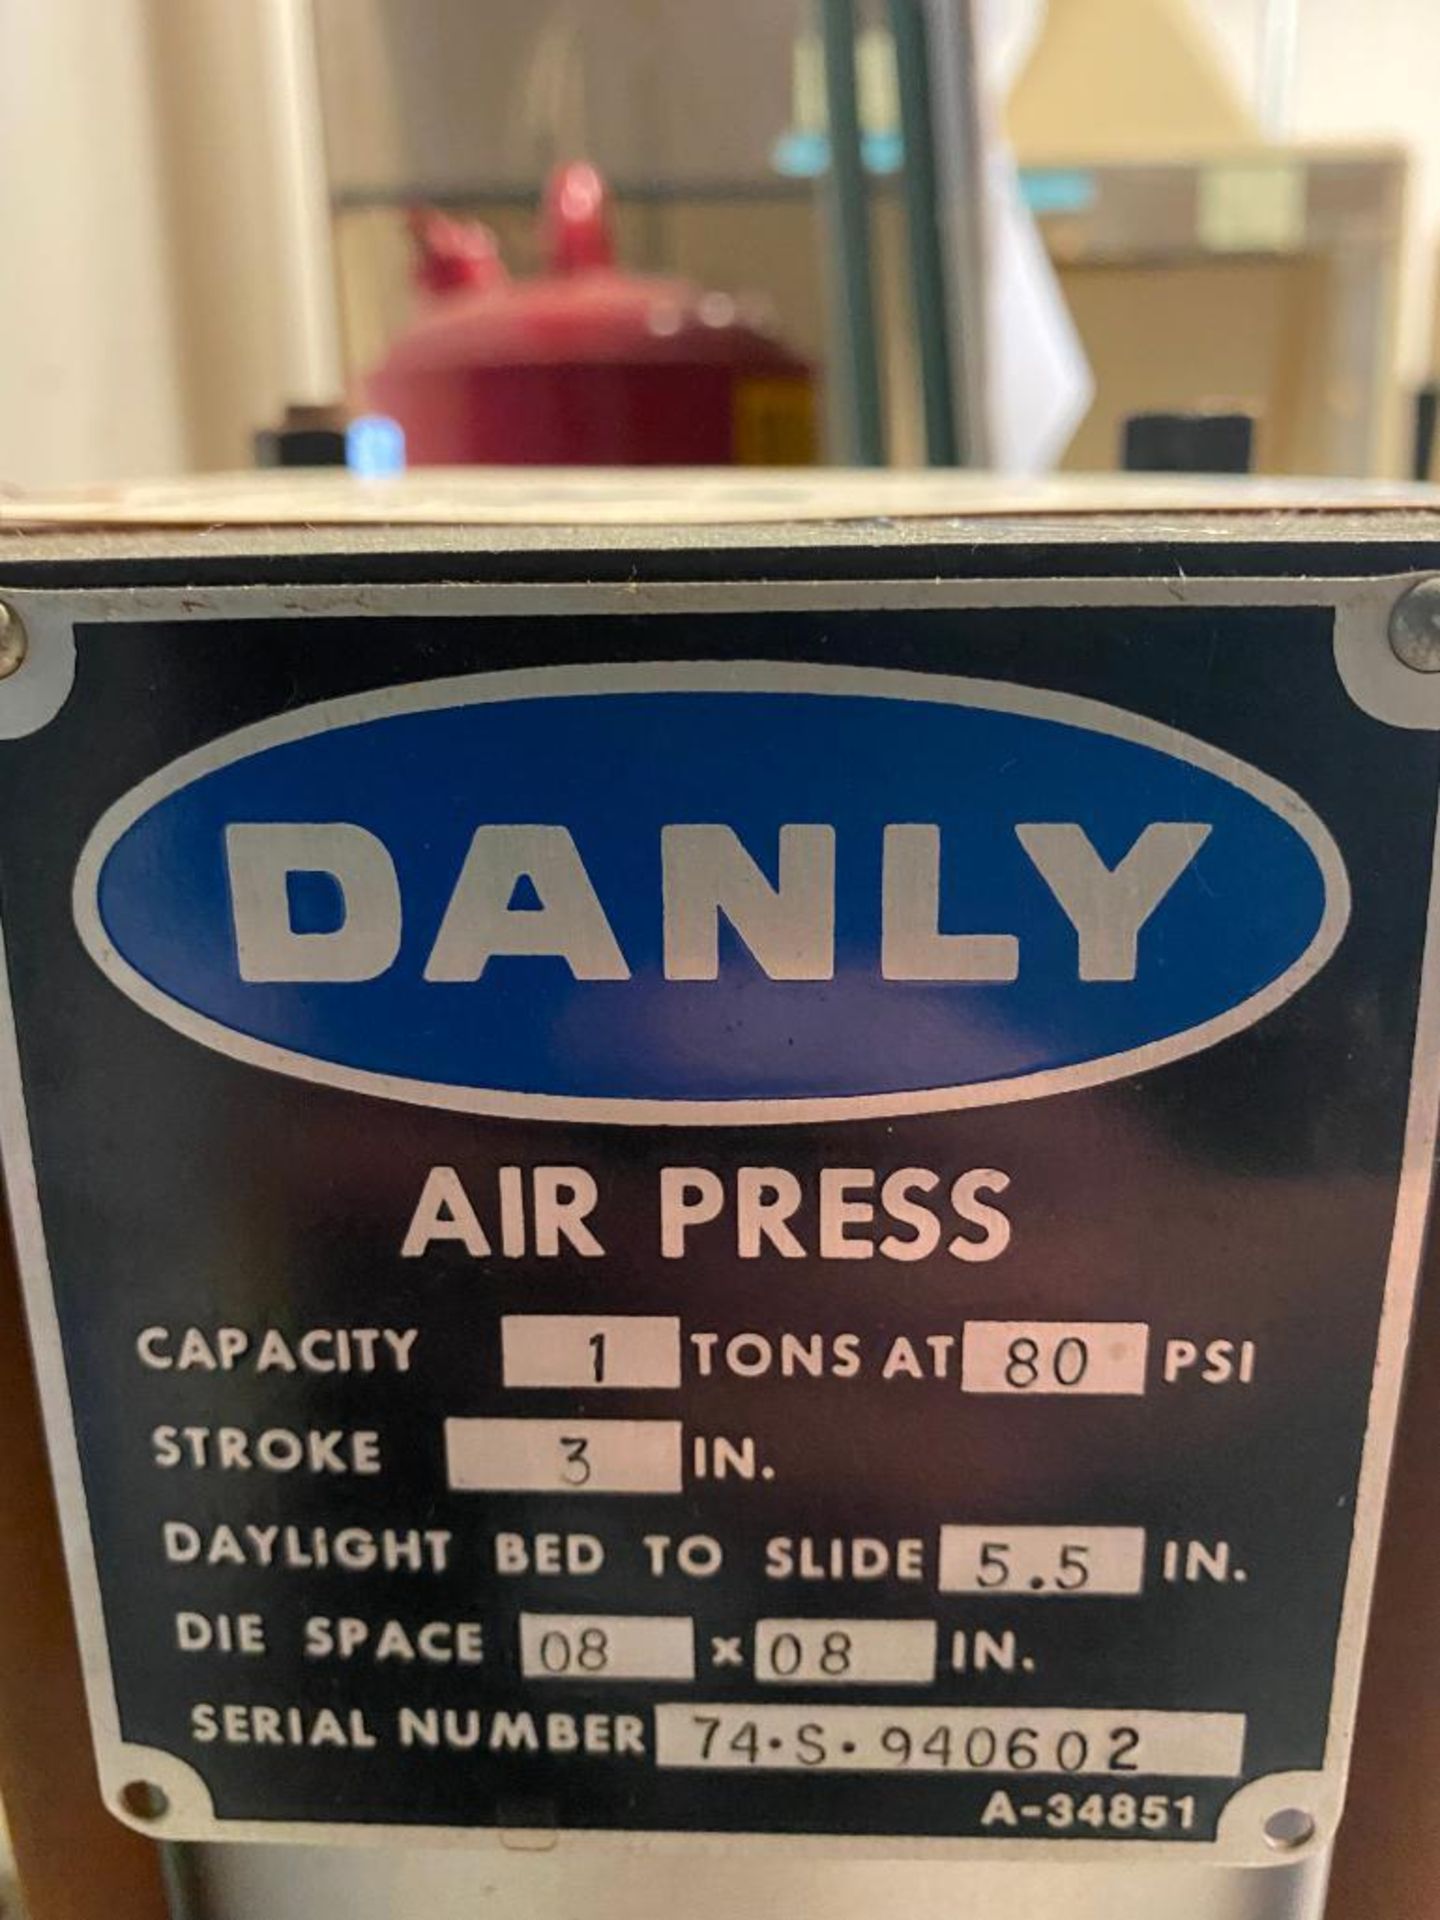 Danly 1 Ton Capacity Air Press - Bild 3 aus 3